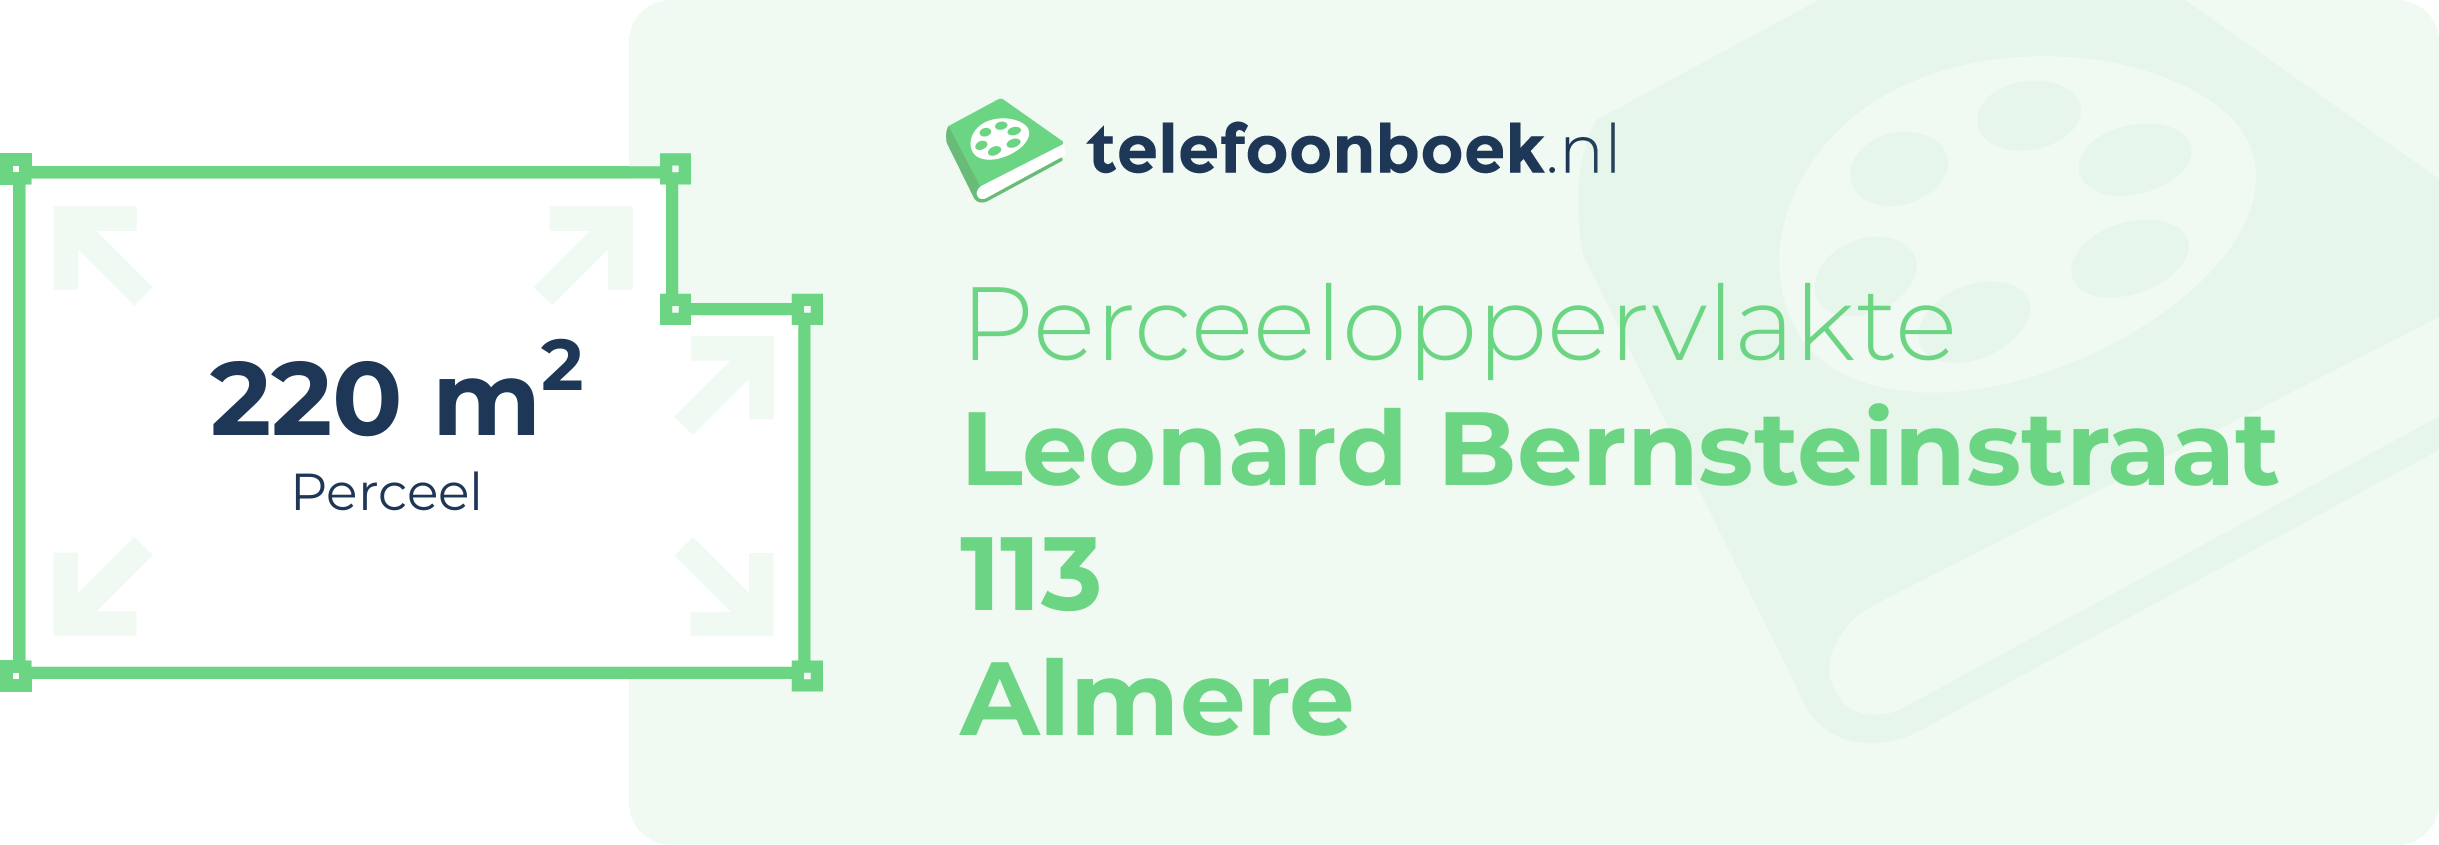 Perceeloppervlakte Leonard Bernsteinstraat 113 Almere